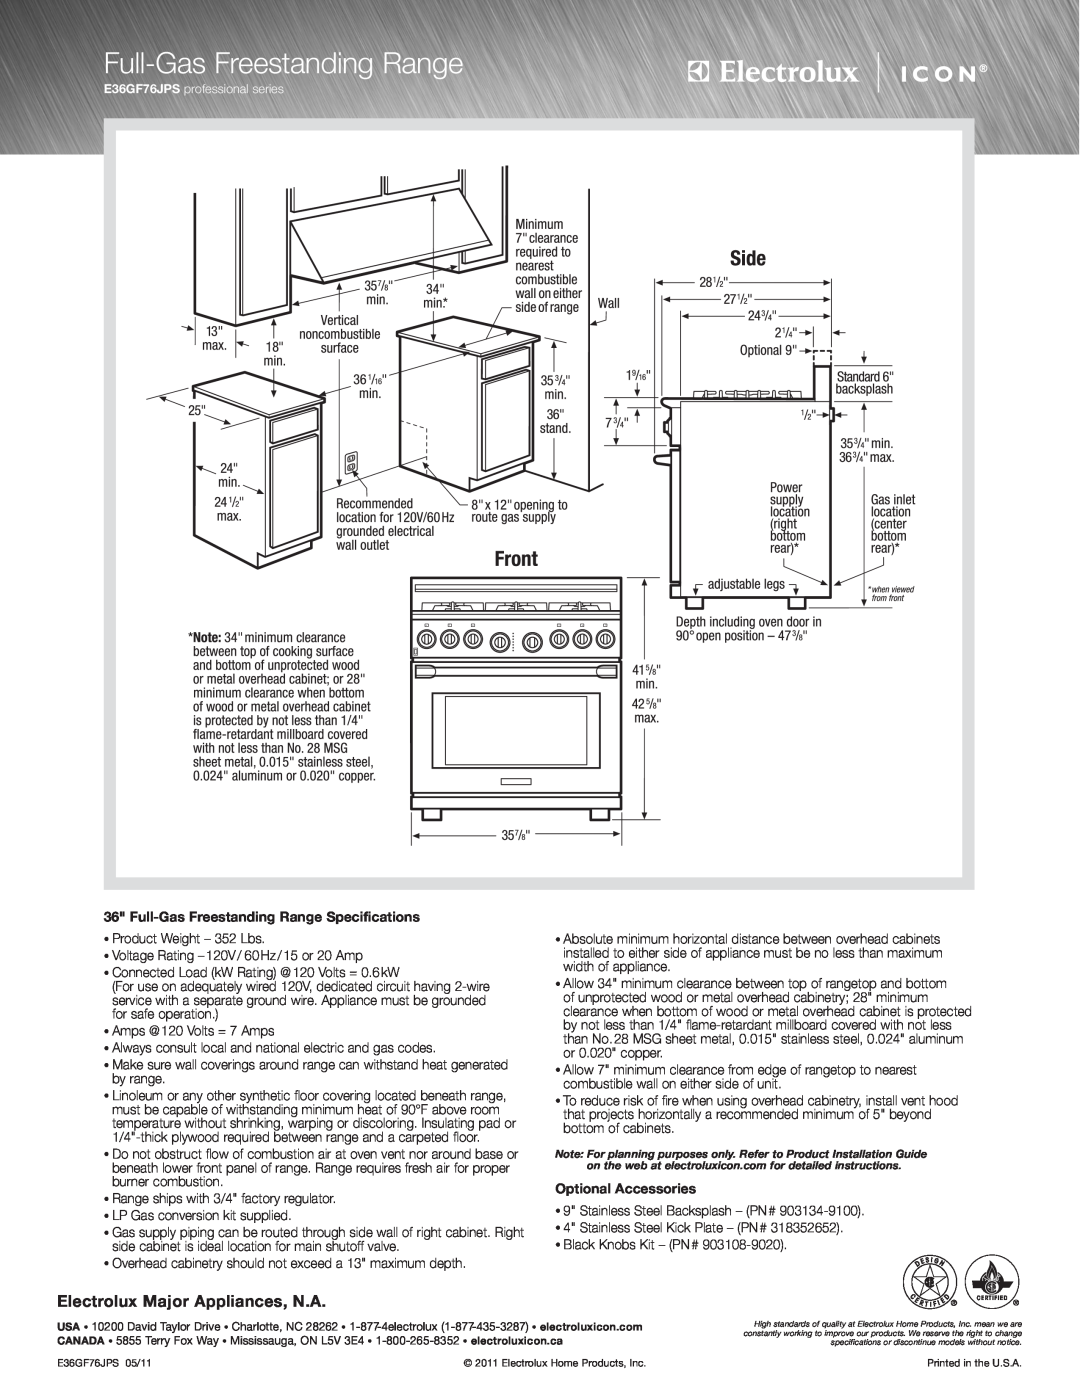 Electrolux E36GF76JPS Electrolux Major Appliances, N.A, Full-Gas Freestanding Range Specifications, Optional Accessories 